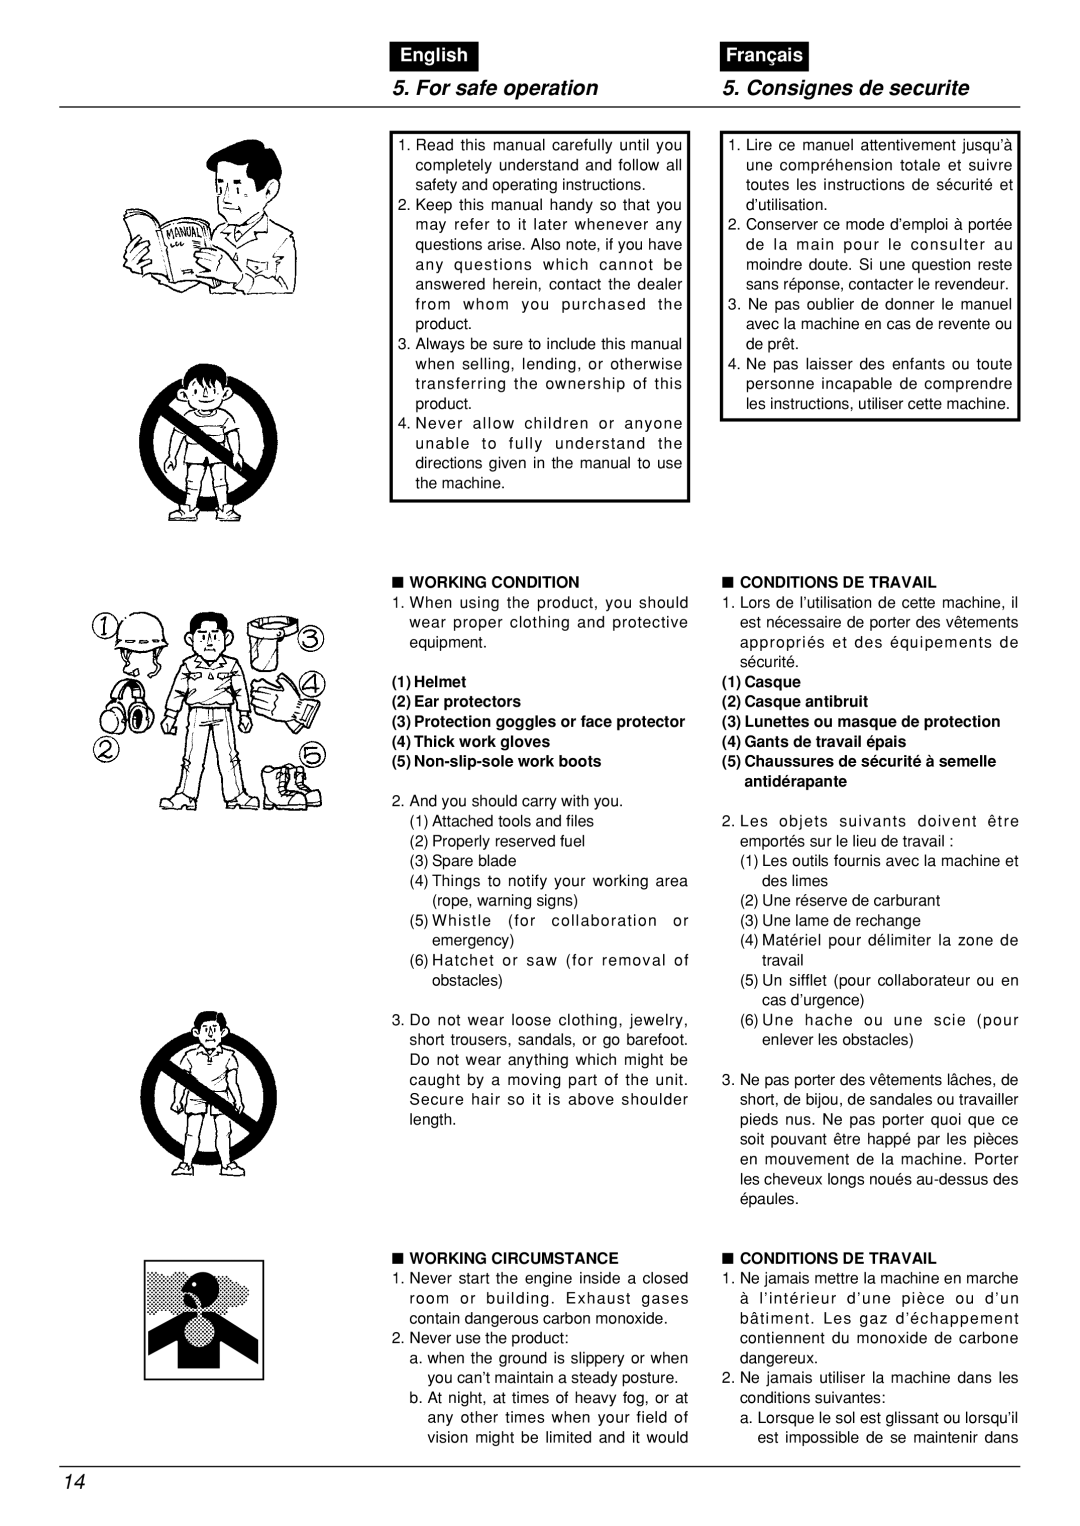 Zenoah BCX2601DL manual For safe operation, Consignes de securite, English, Français 